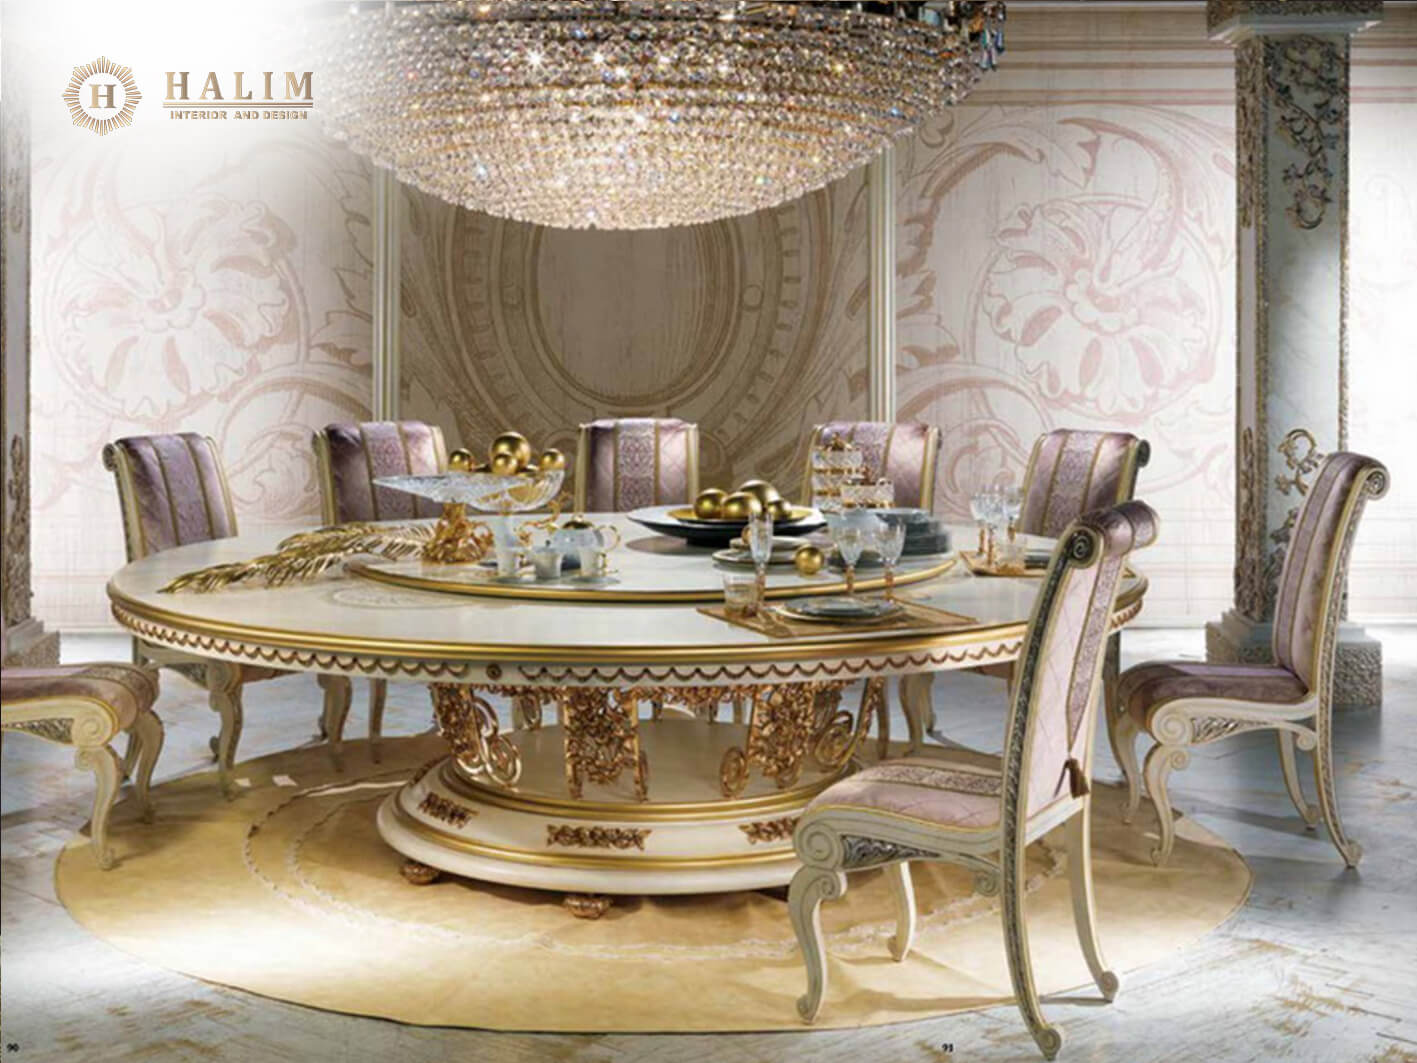 Halim Interior modern furniture contemporer american style minimalist european classic surabaya dining set 01 045